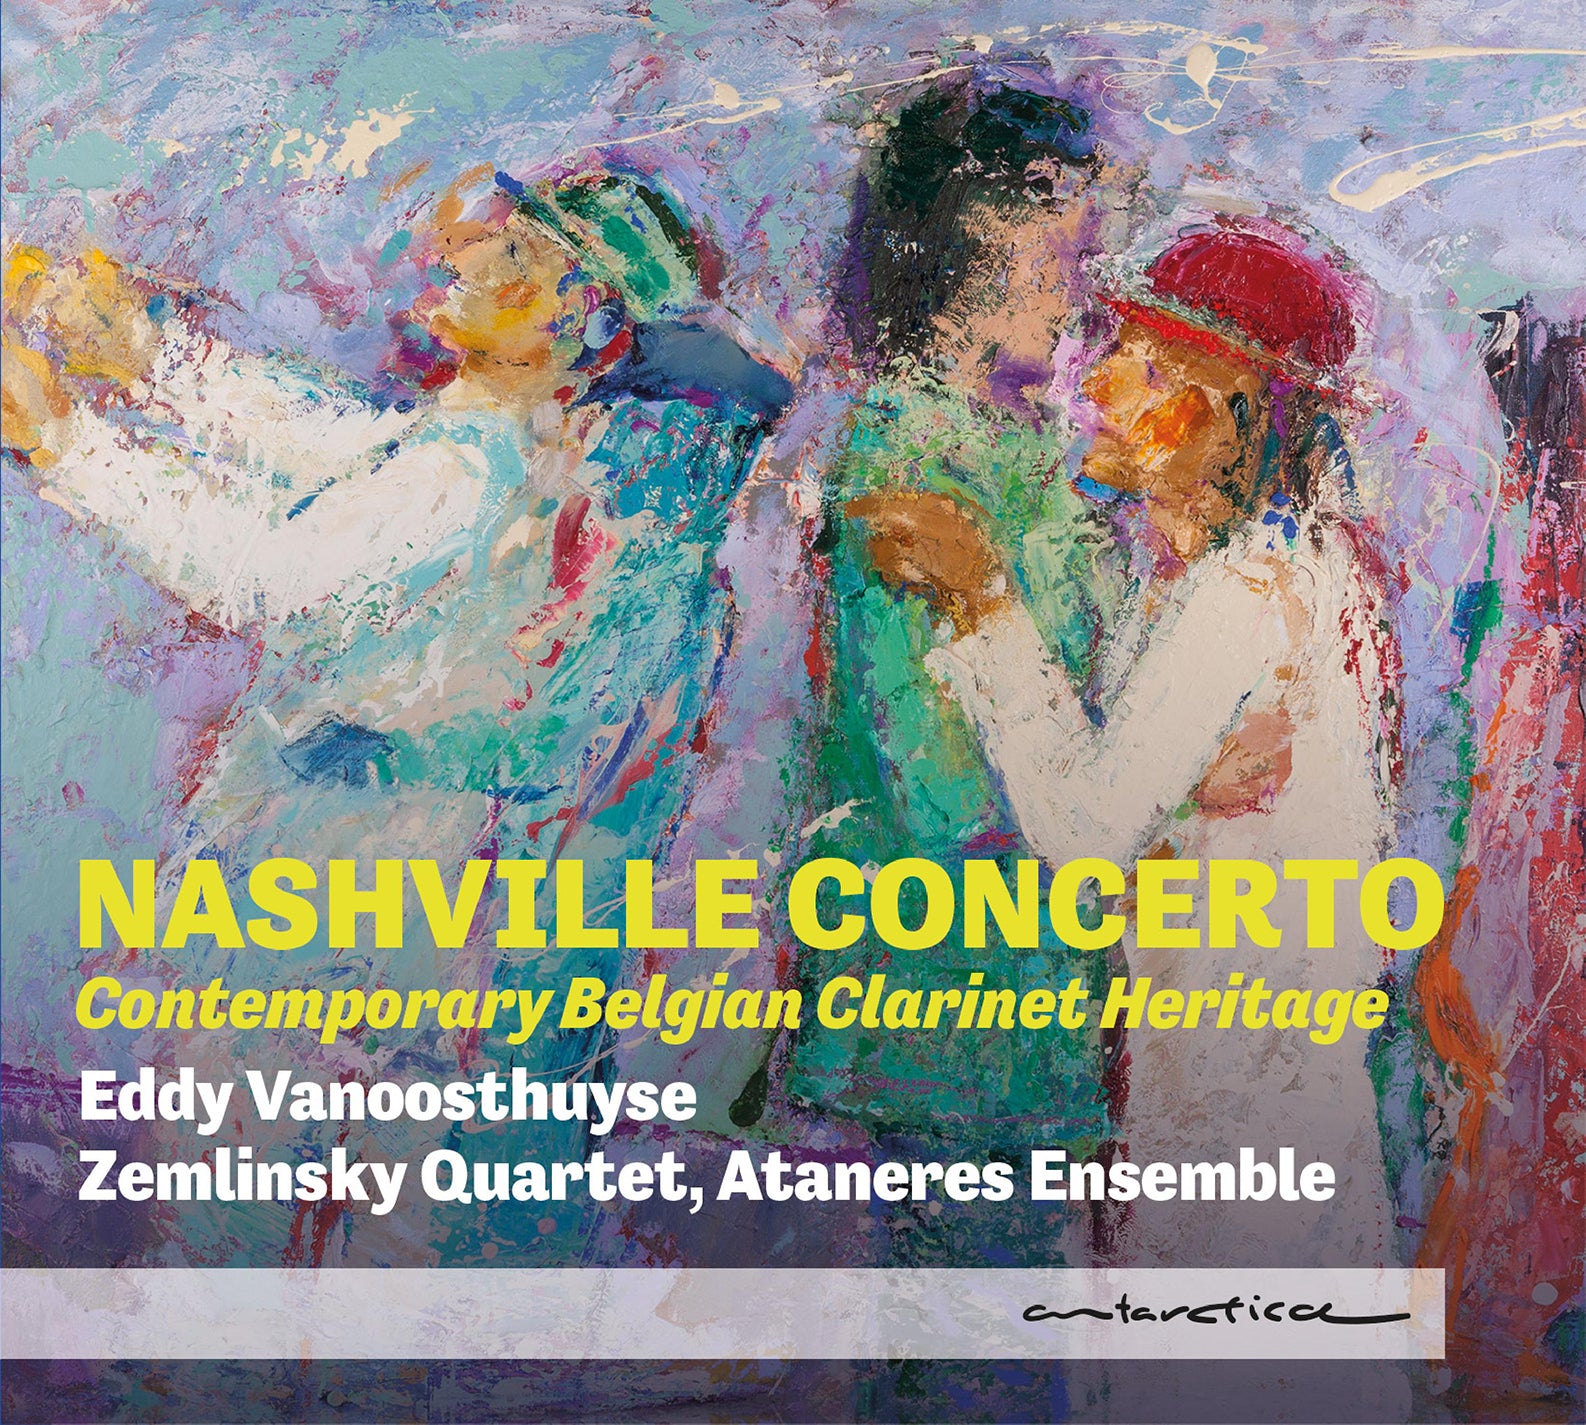 Nashville Concerto - Dutch Clarinet Music / Vanoosthuyse, Zemlinsky Quartet, Ataneres Ensemble